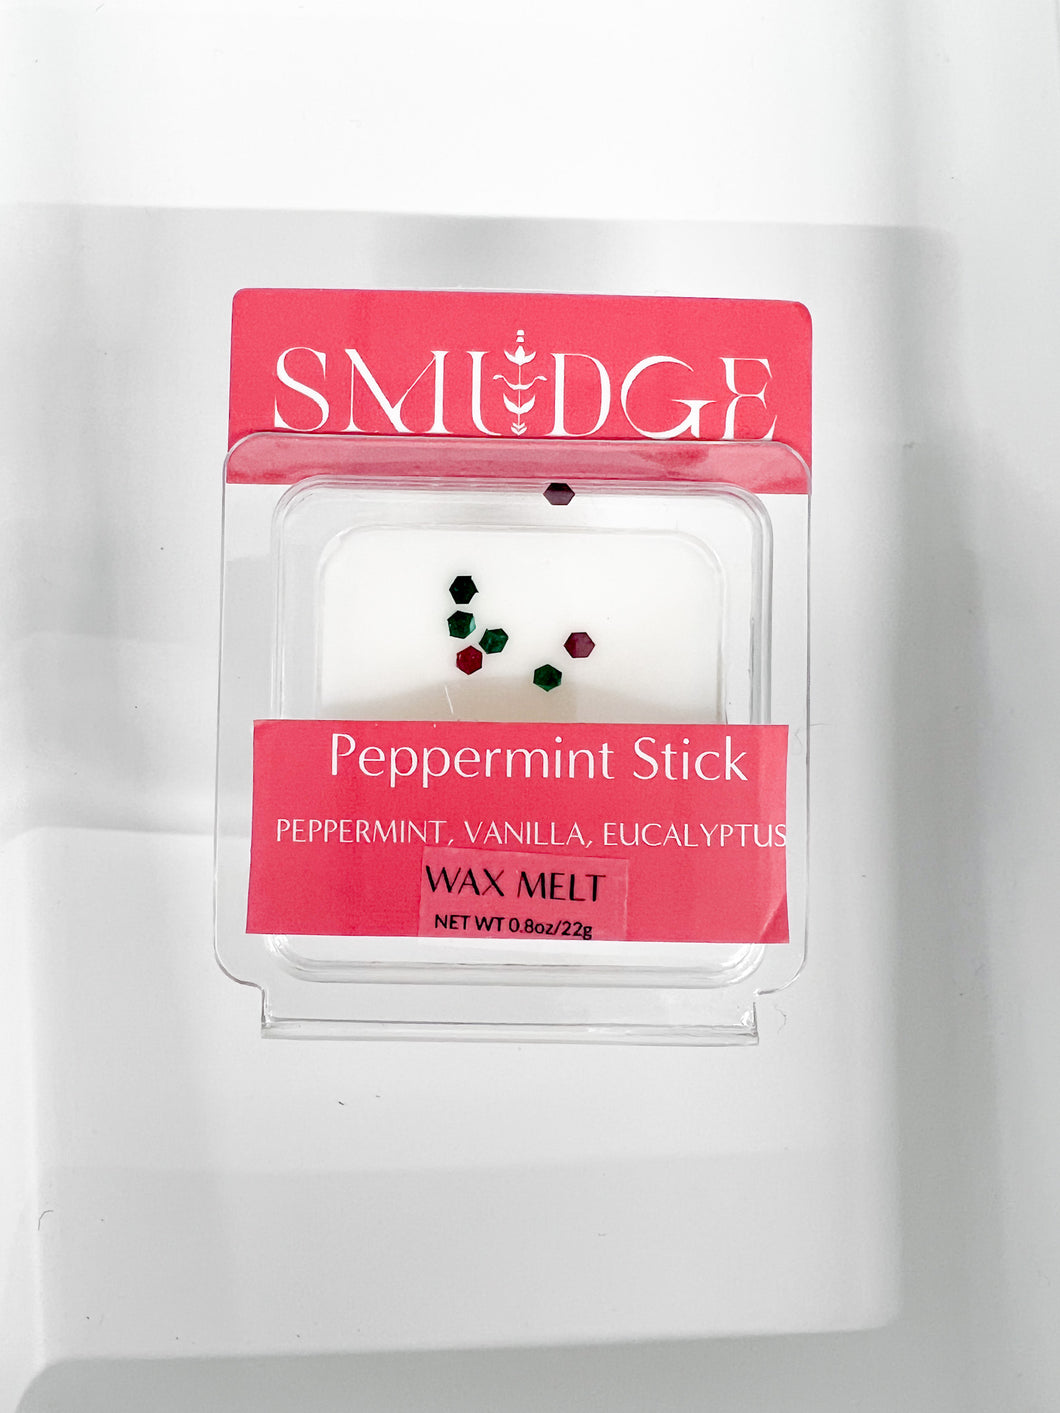 Peppermint Stick Wax Melt 0.8oz